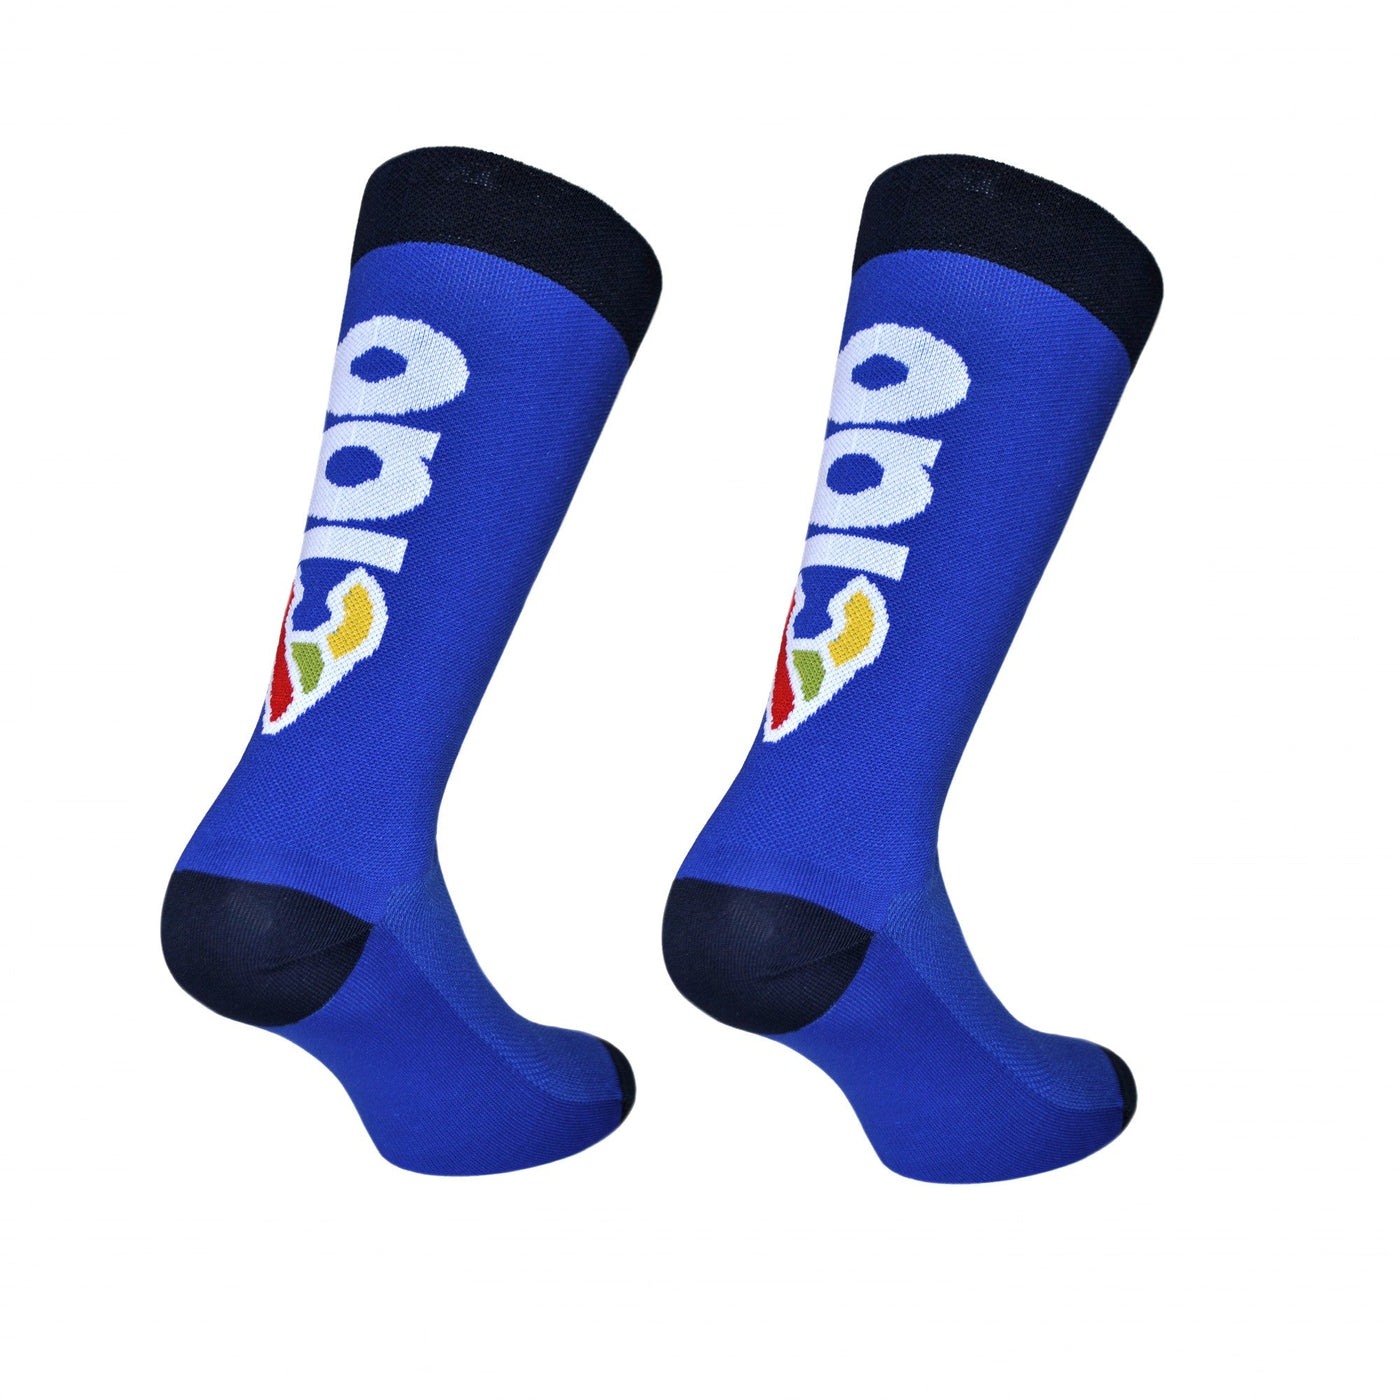 CIAO BLUE SOCKS, Socks, IMG.1